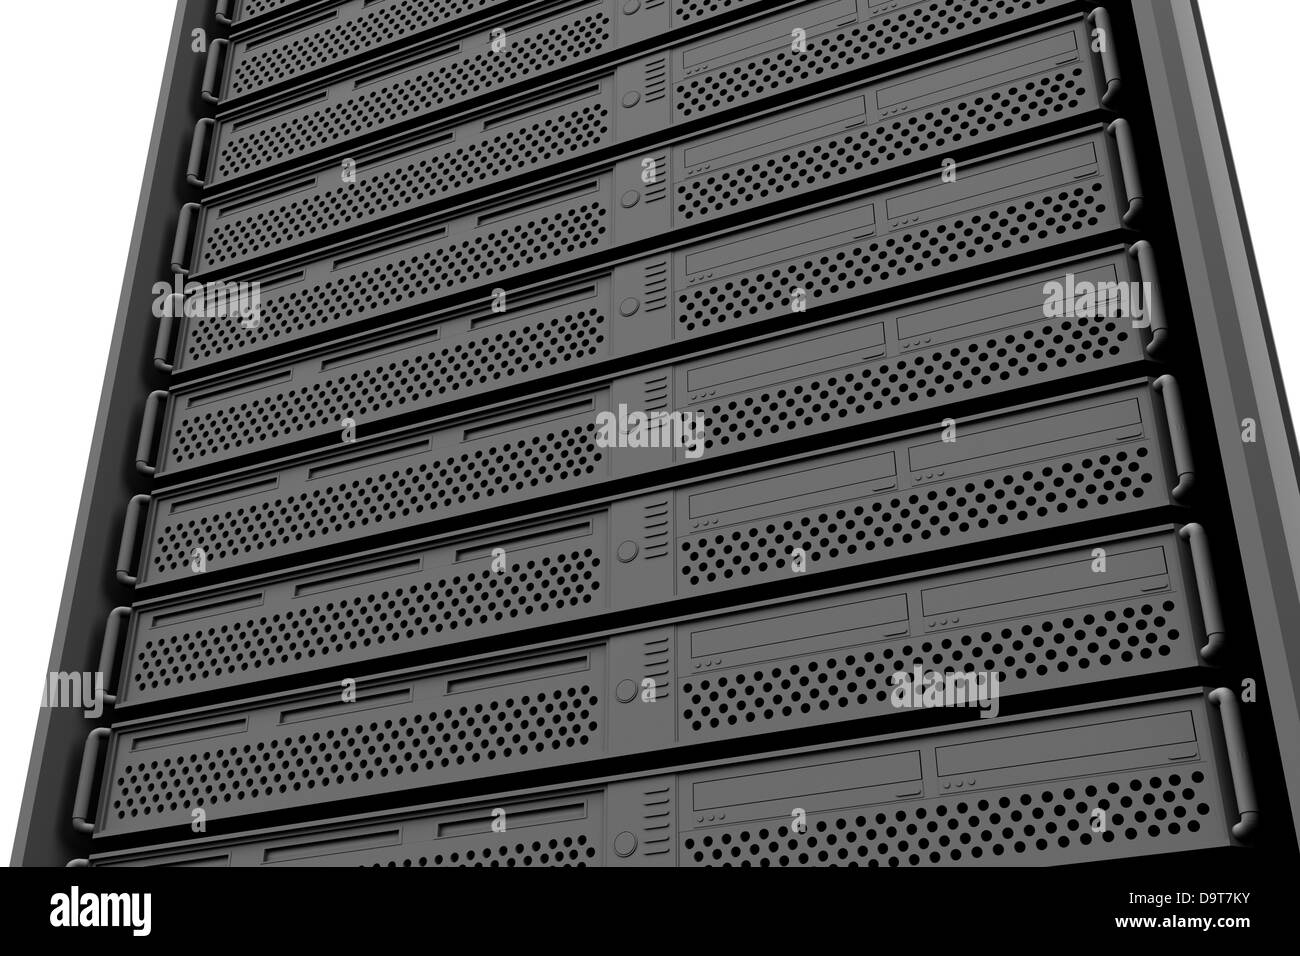 Row of tower servers Stock Photo